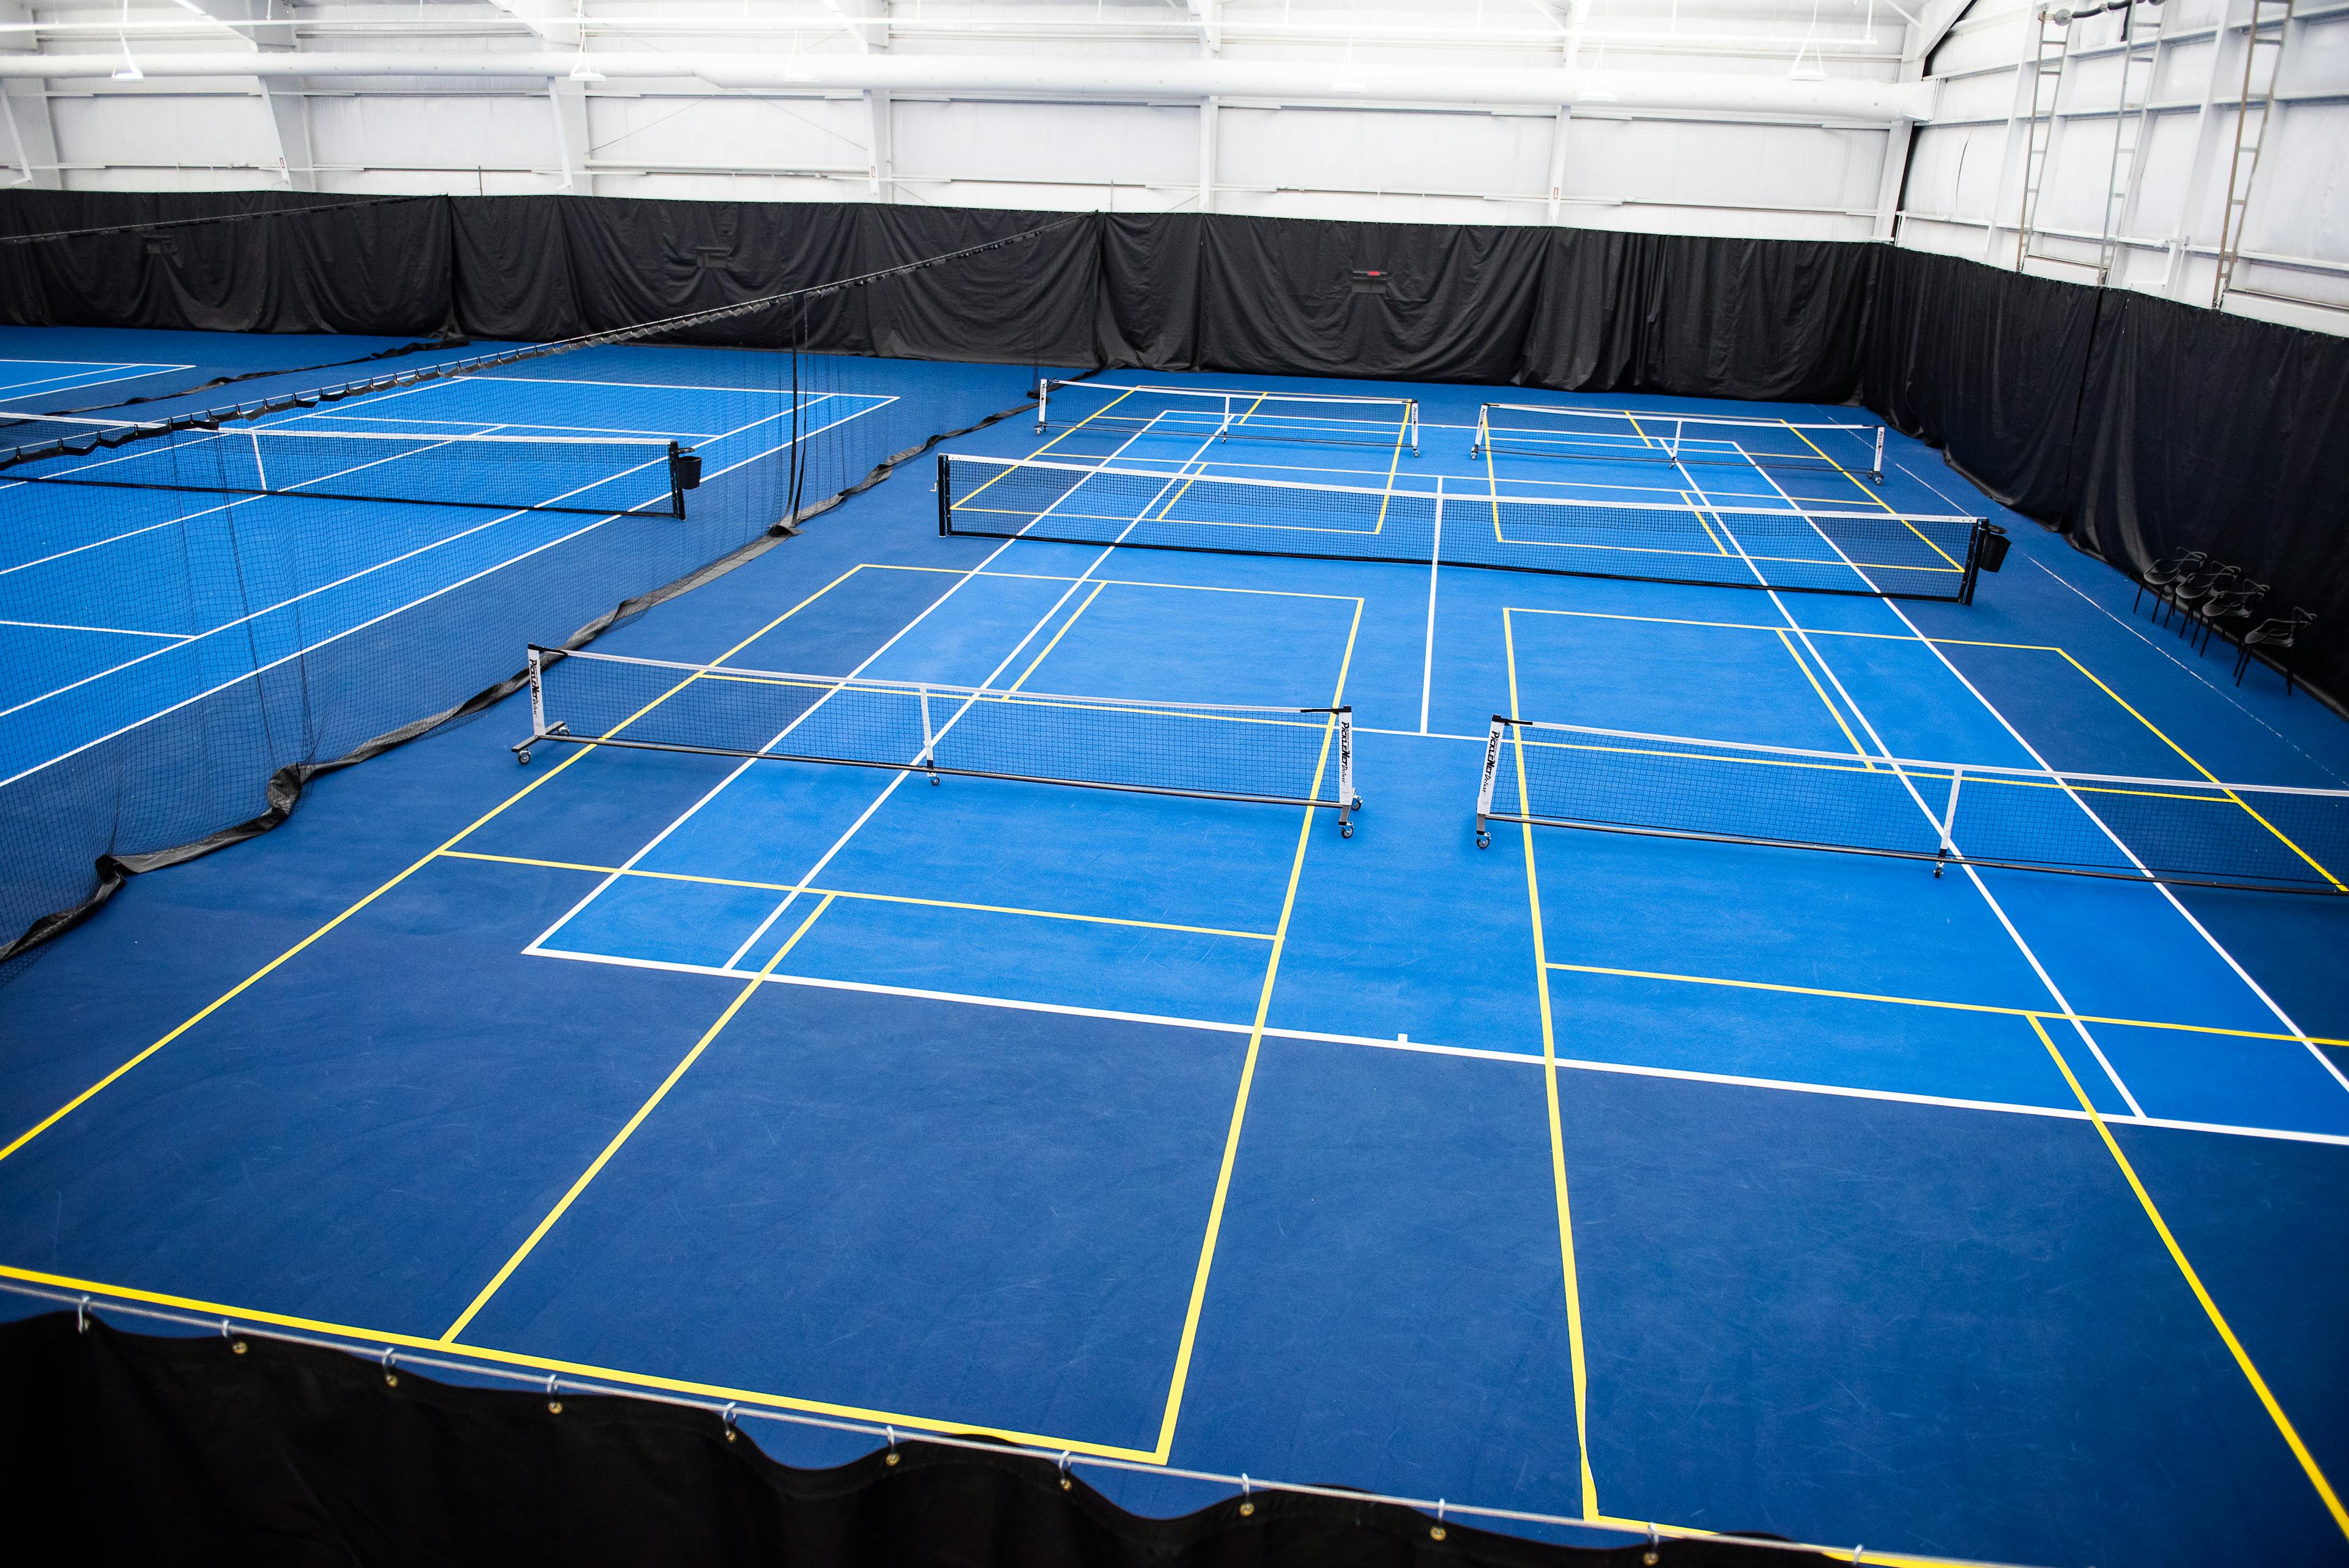 Image 4 of 8 of Matrix Racquet Club court